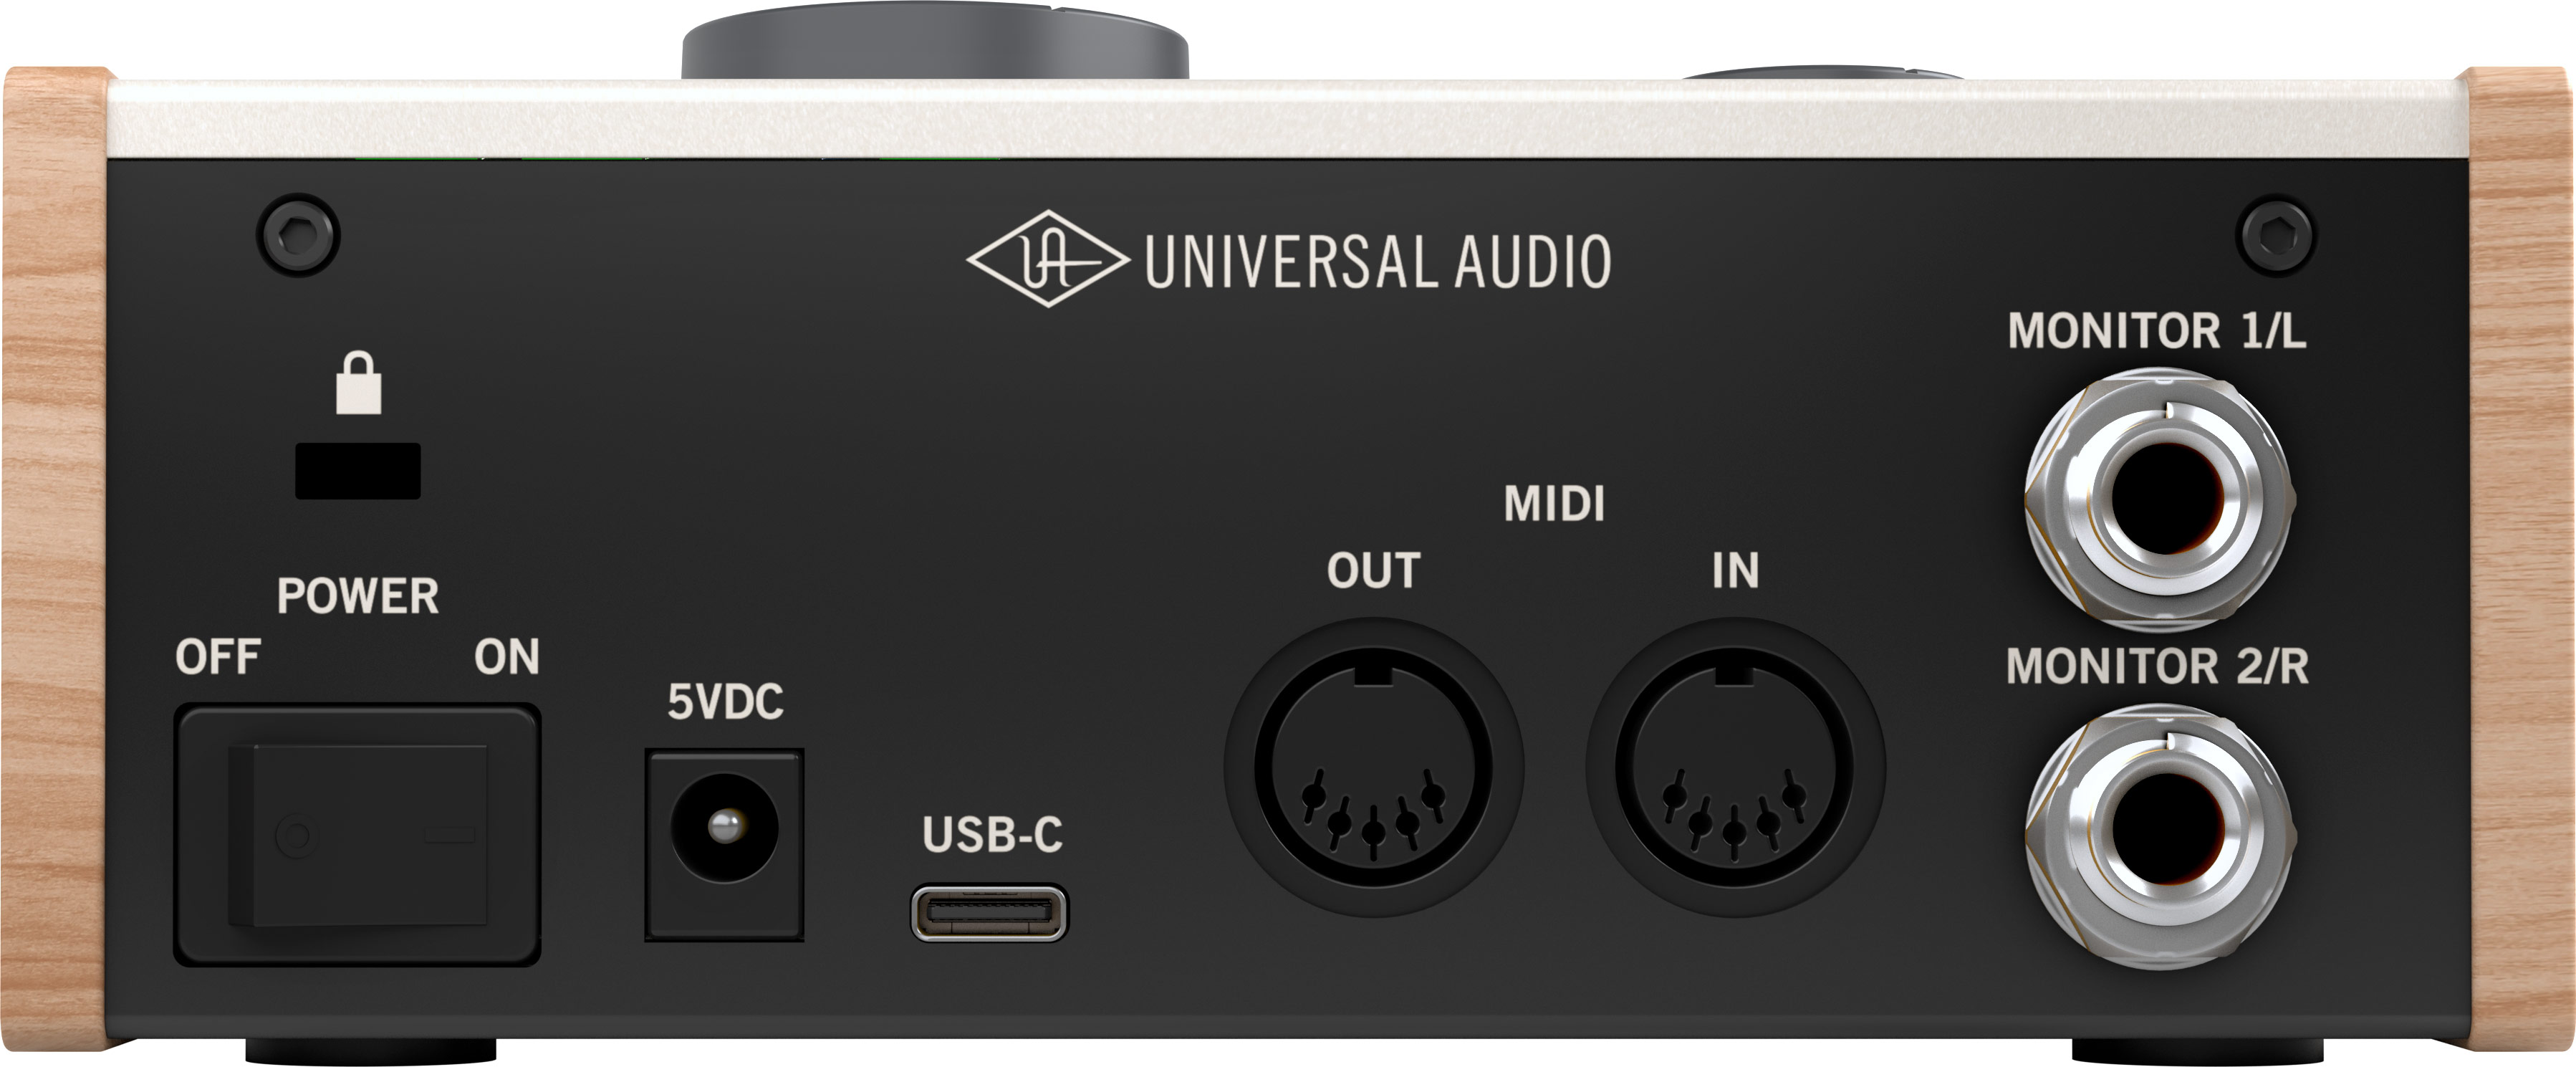 Universal Audio VOLT 176 USB Audio Interface | guitarguitar